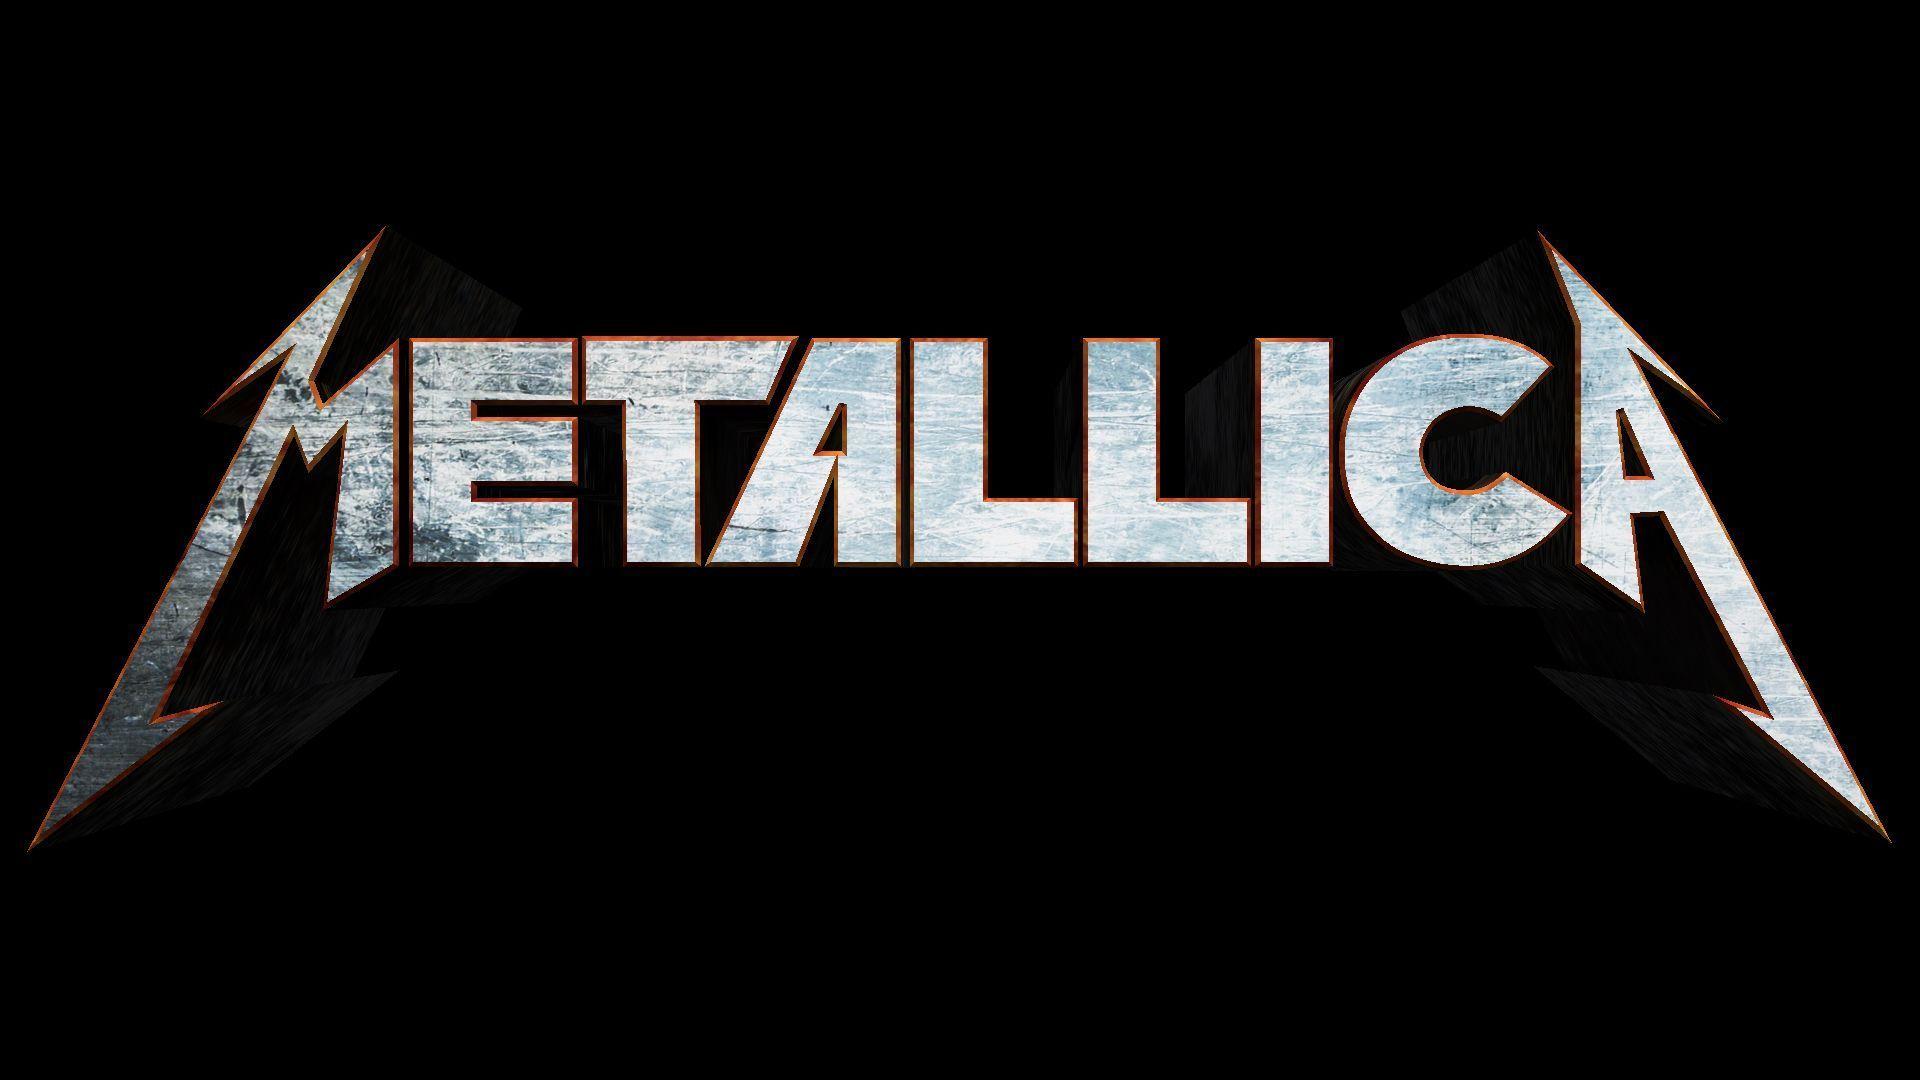 Metallica The Black Album Wallpapers - Wallpaper Cave